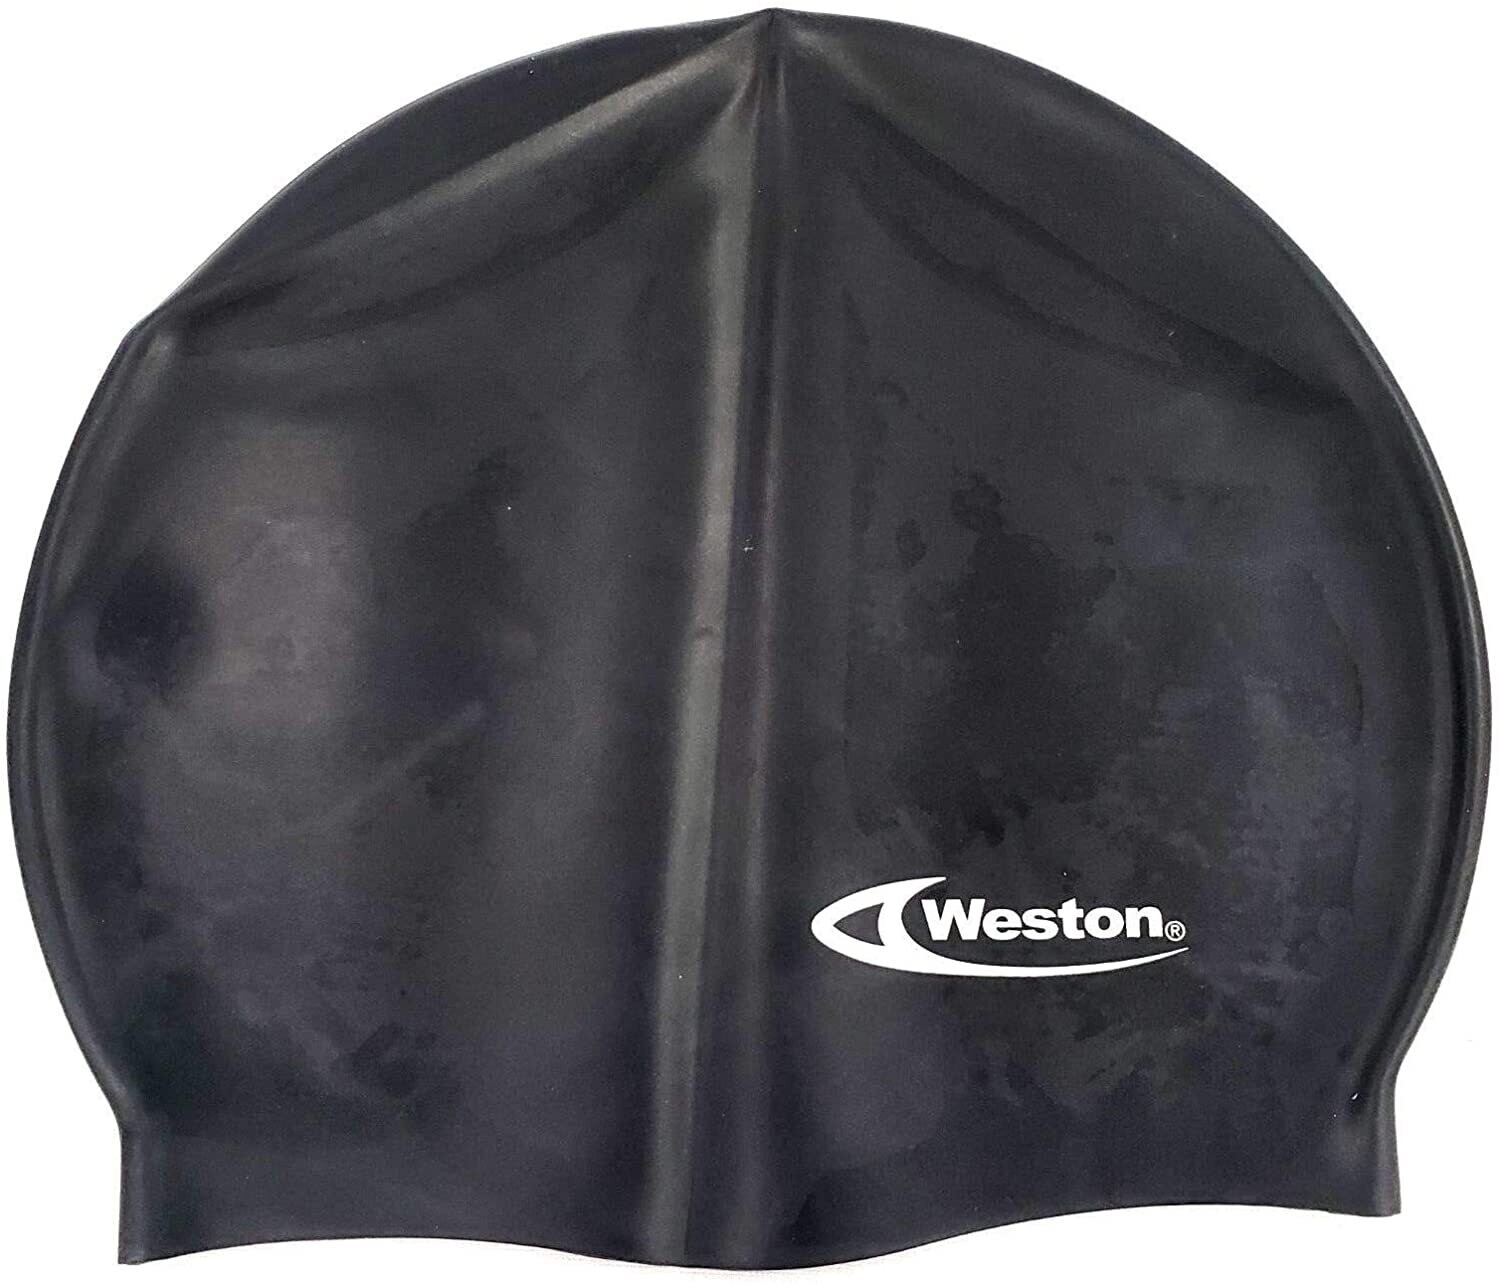 Weston - Gorro de natación de silicona para adultos, varios colores